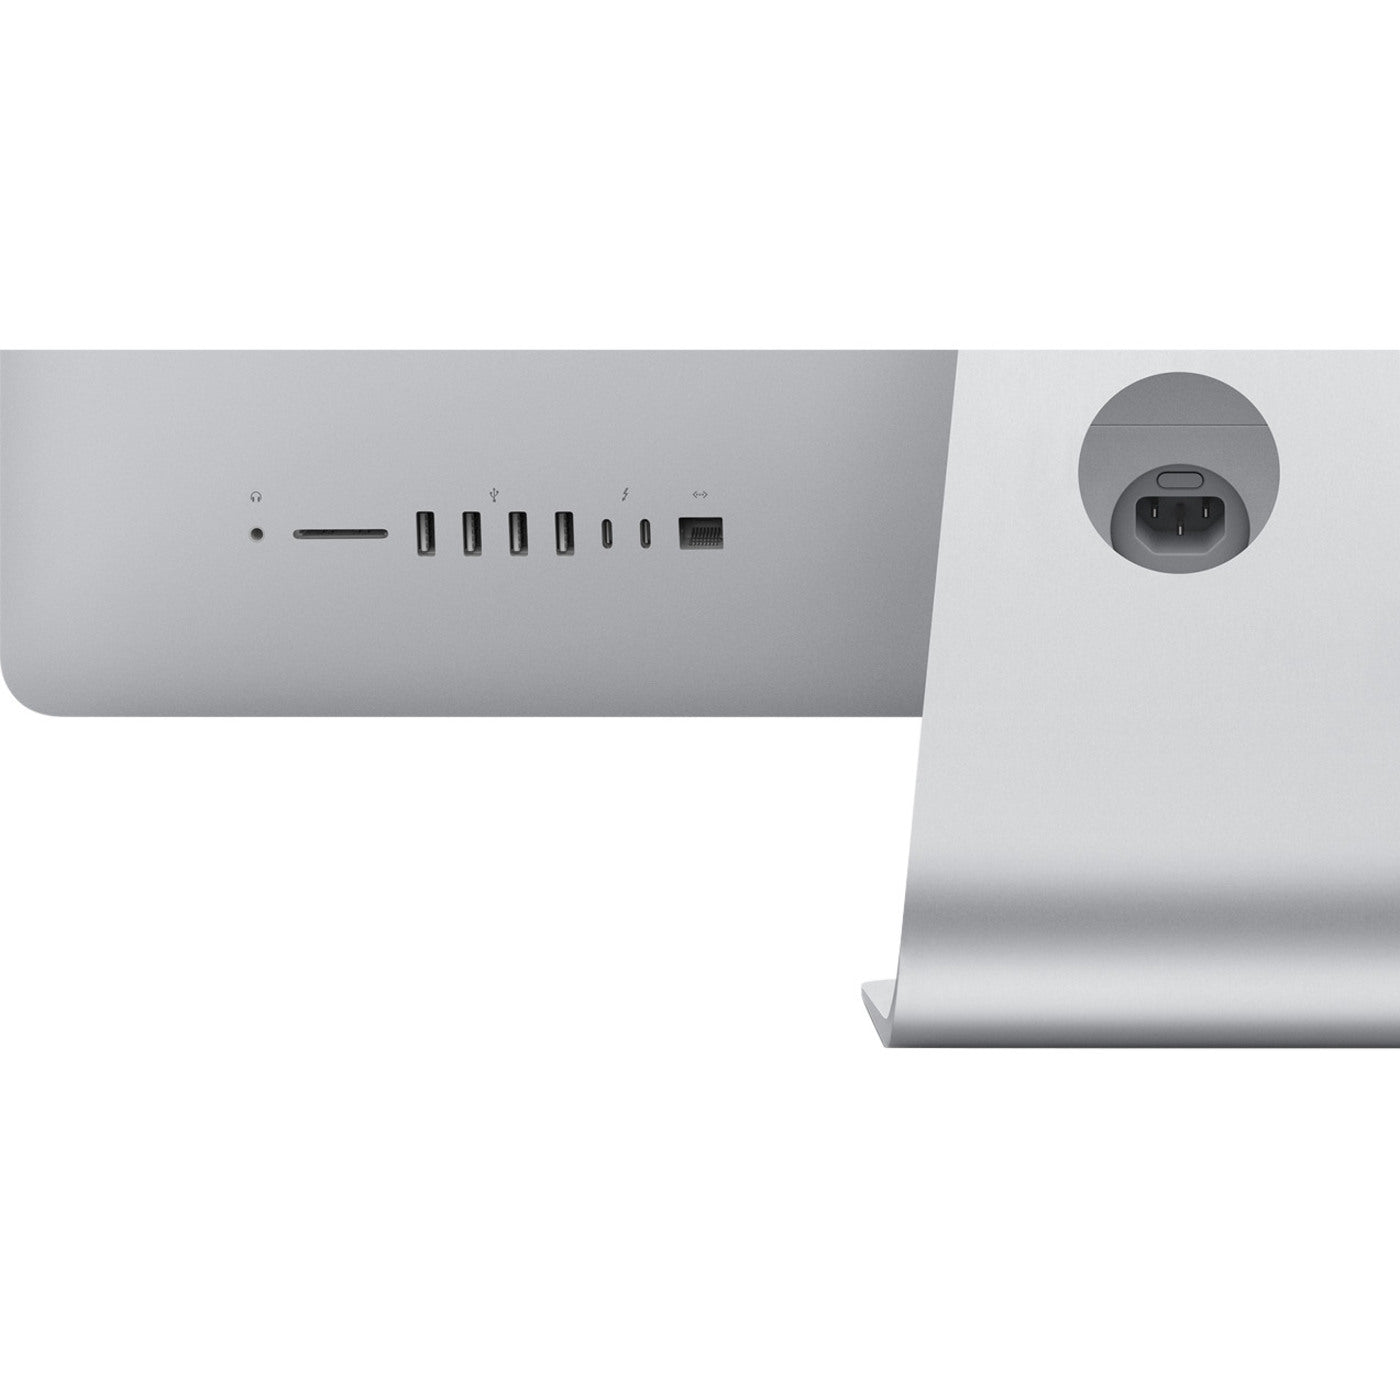 Apple MNDY2LL/A iMac 21.5-inch with Retina 4K Display, Core i5 3.0GHz, 8GB RAM, 1TB HDD, Radeon Pro 555